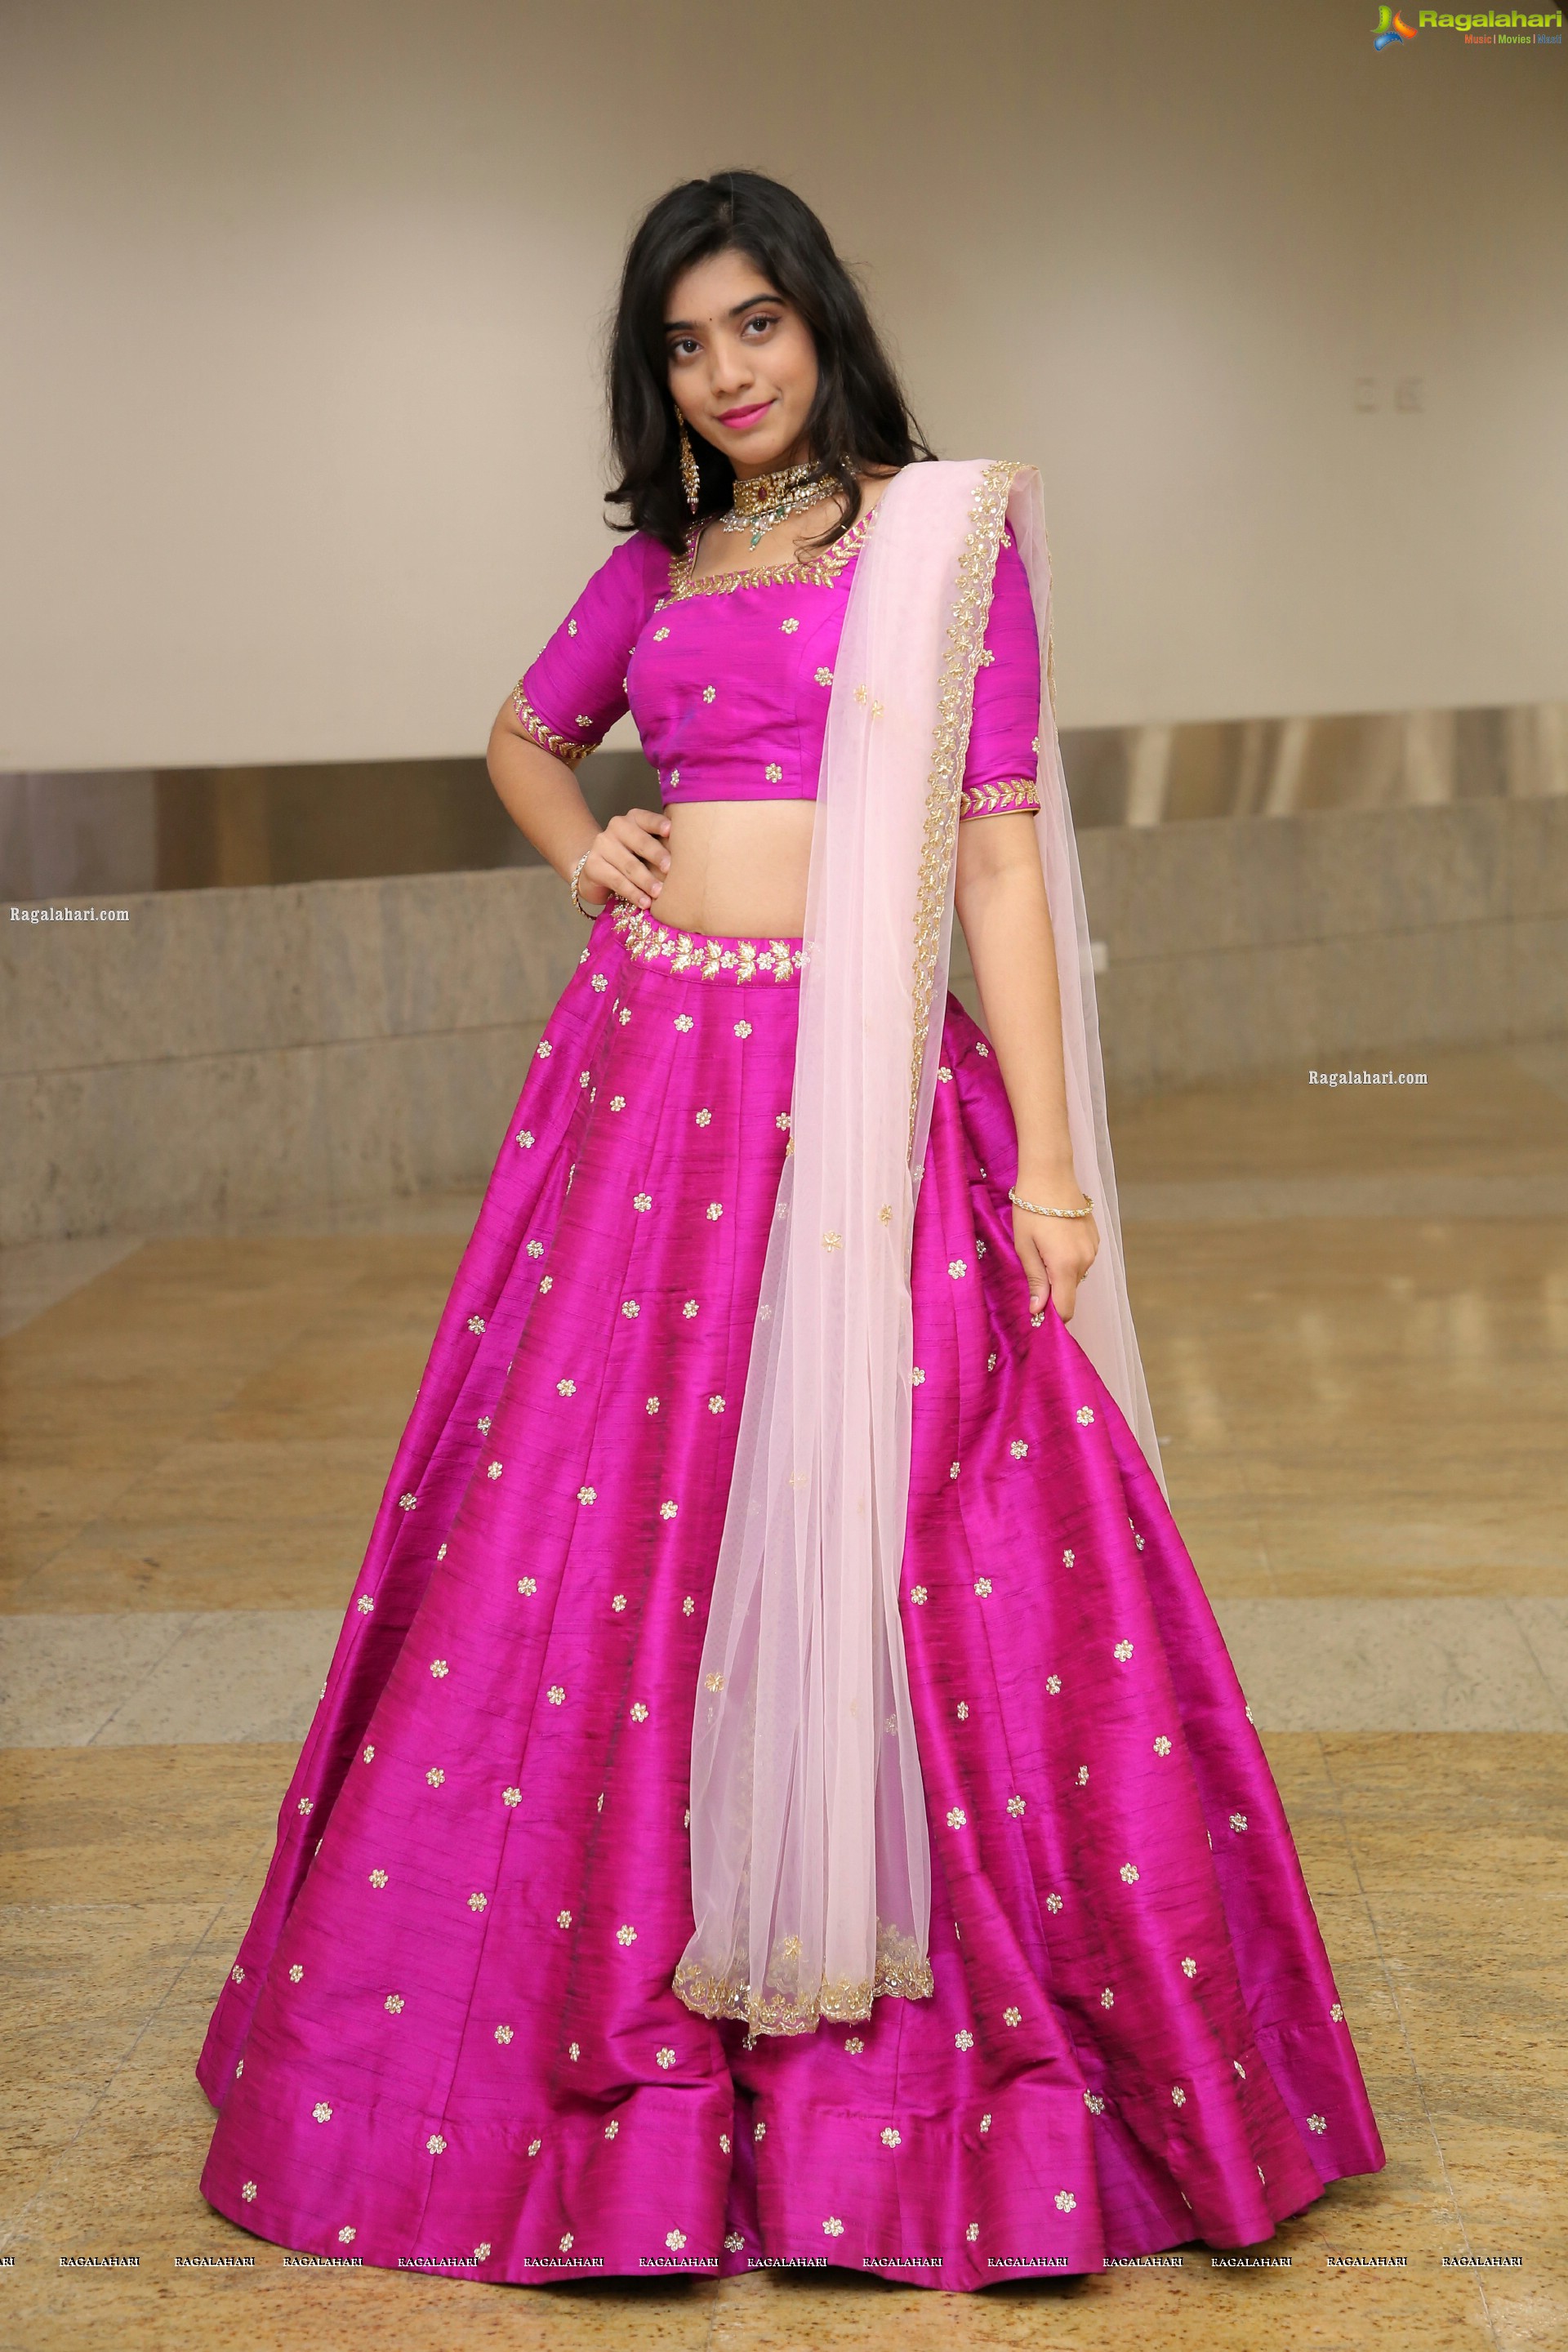 Nikita Choudary in Pink Designer Lehenga, HD Photo Gallery